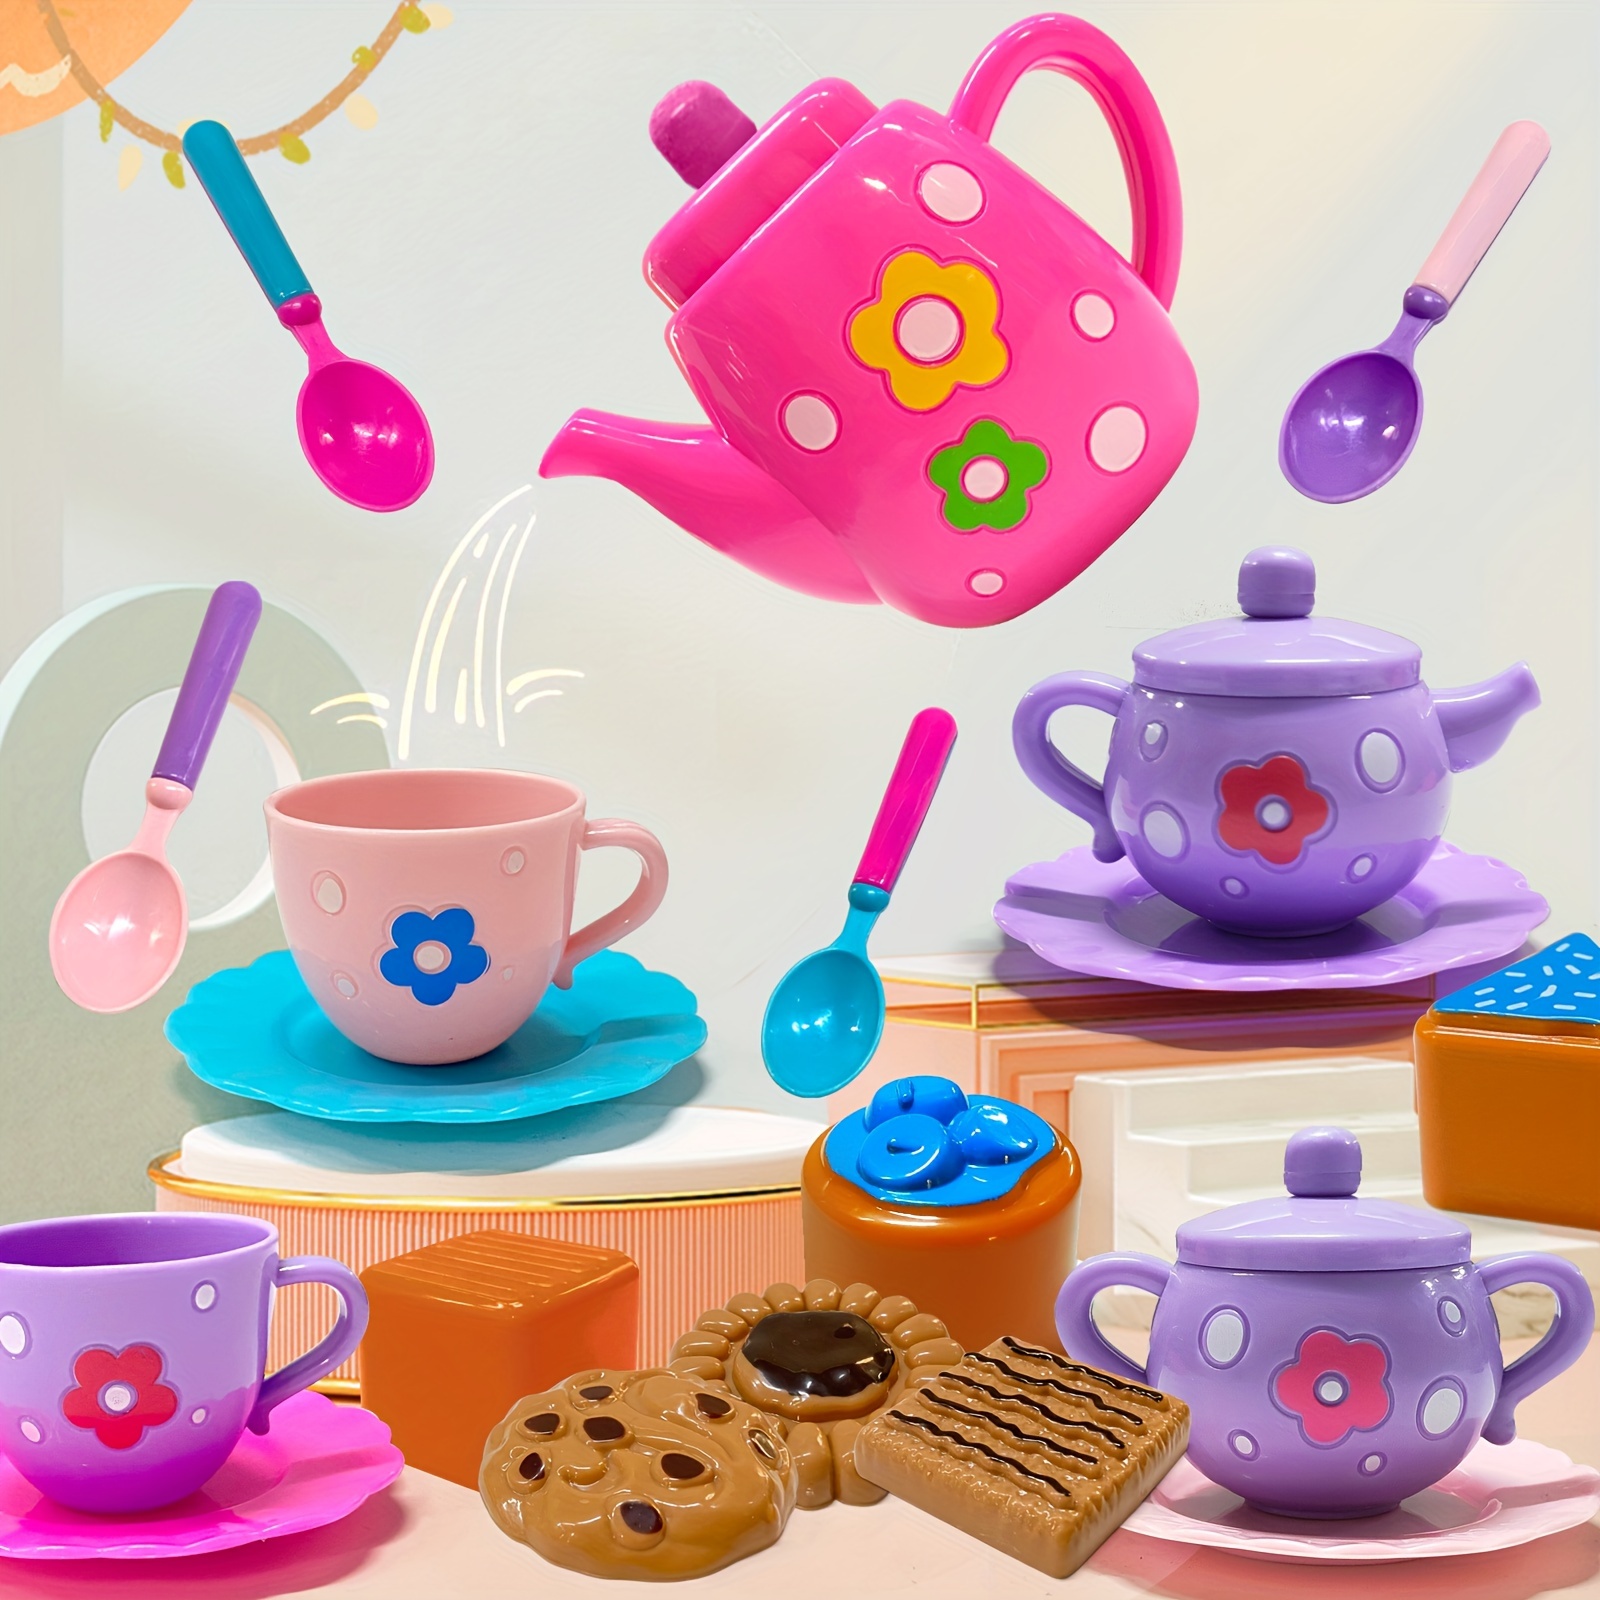 

Tea Set For Little Girls, Tea Party Set, Tea Set For Toddlers Including Kettle, , Kids Play Food, Tea Party Accessories Toy For Toddlers, Boys Girls Gifts